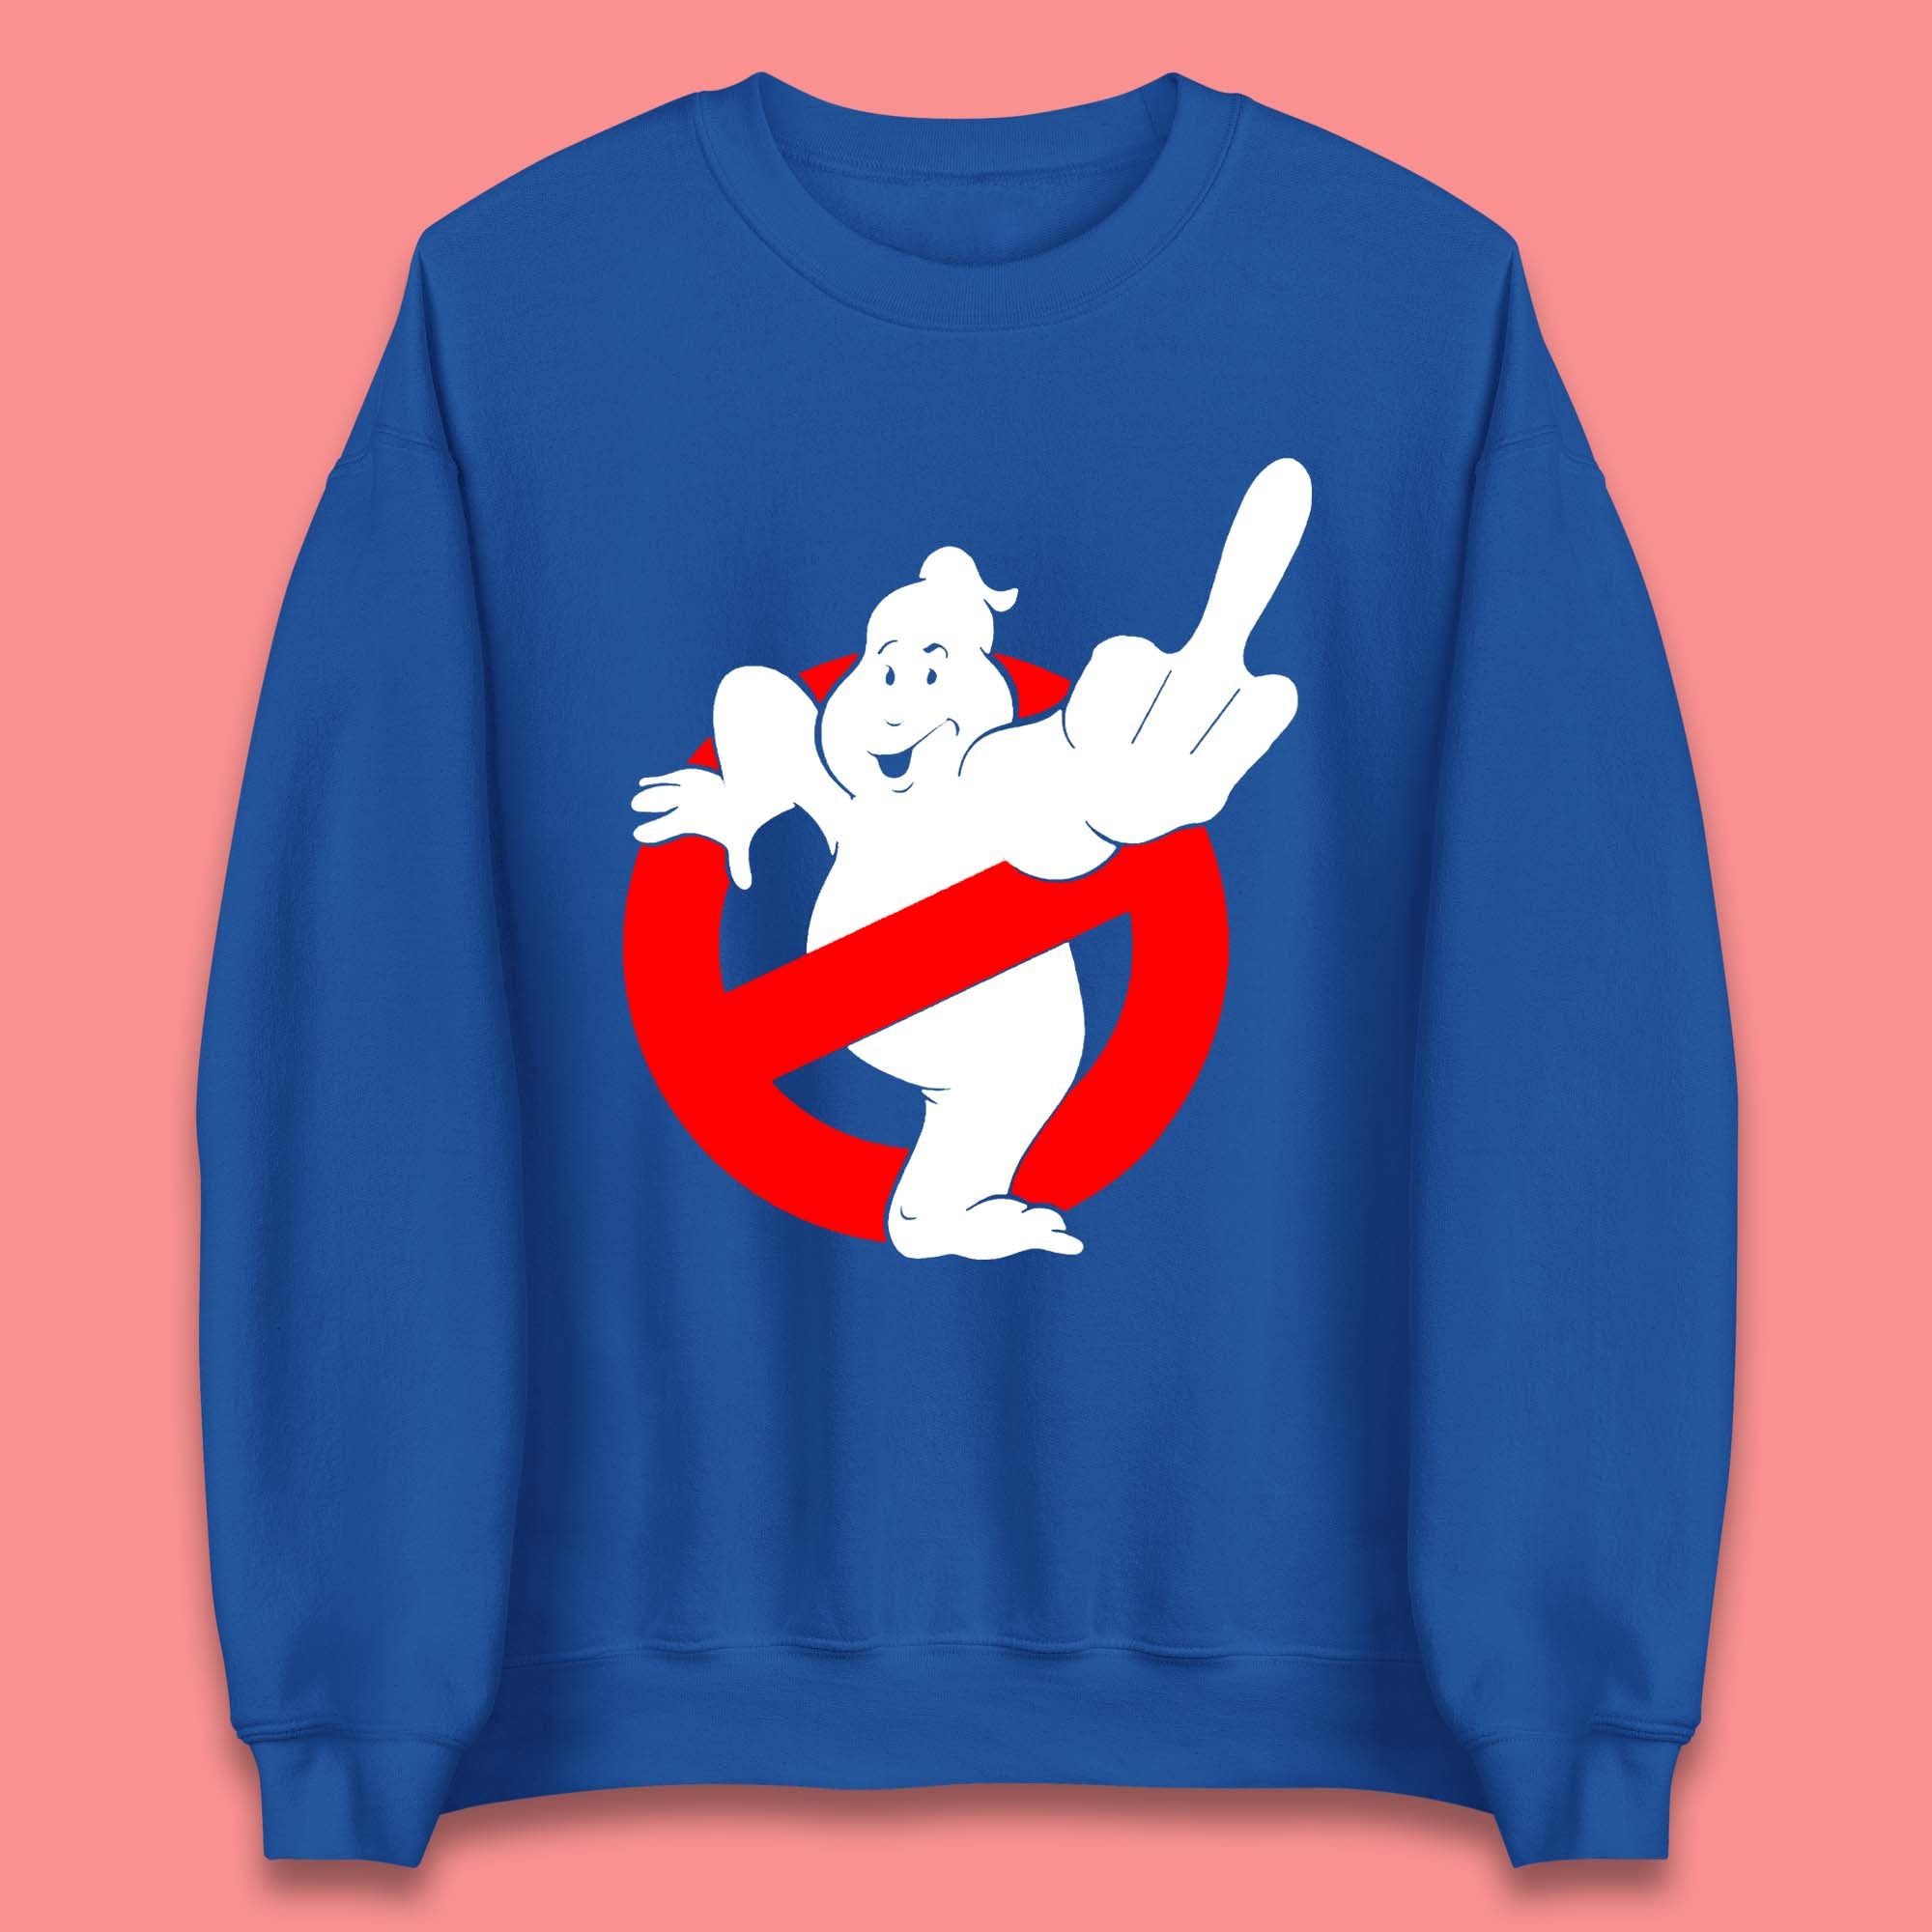 Ghostbusters Sweatshirt